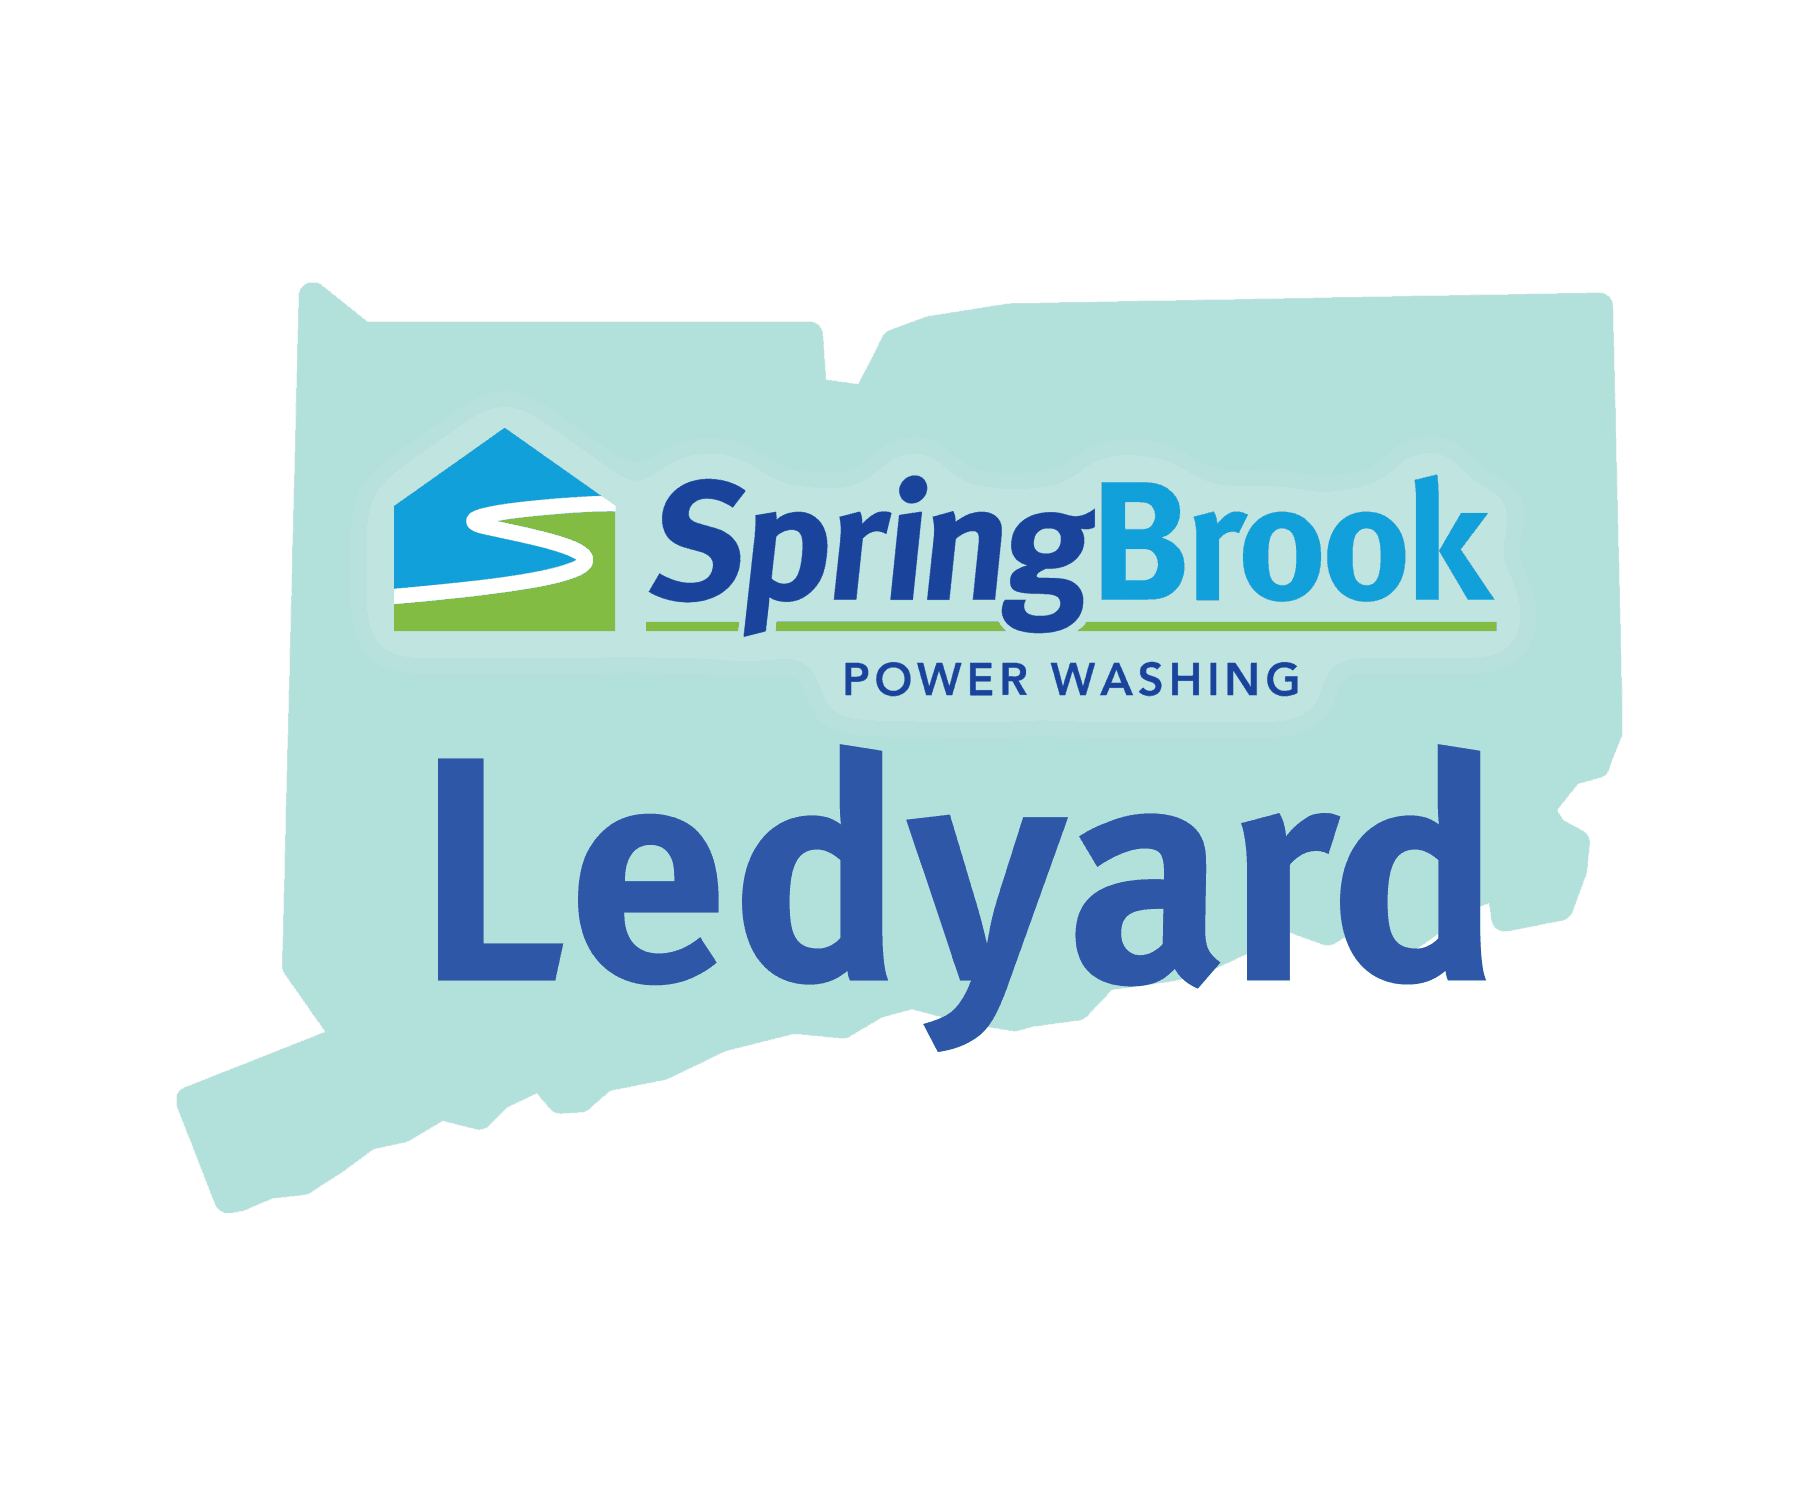 Springbrook Power Washing Ledyard Connecticut